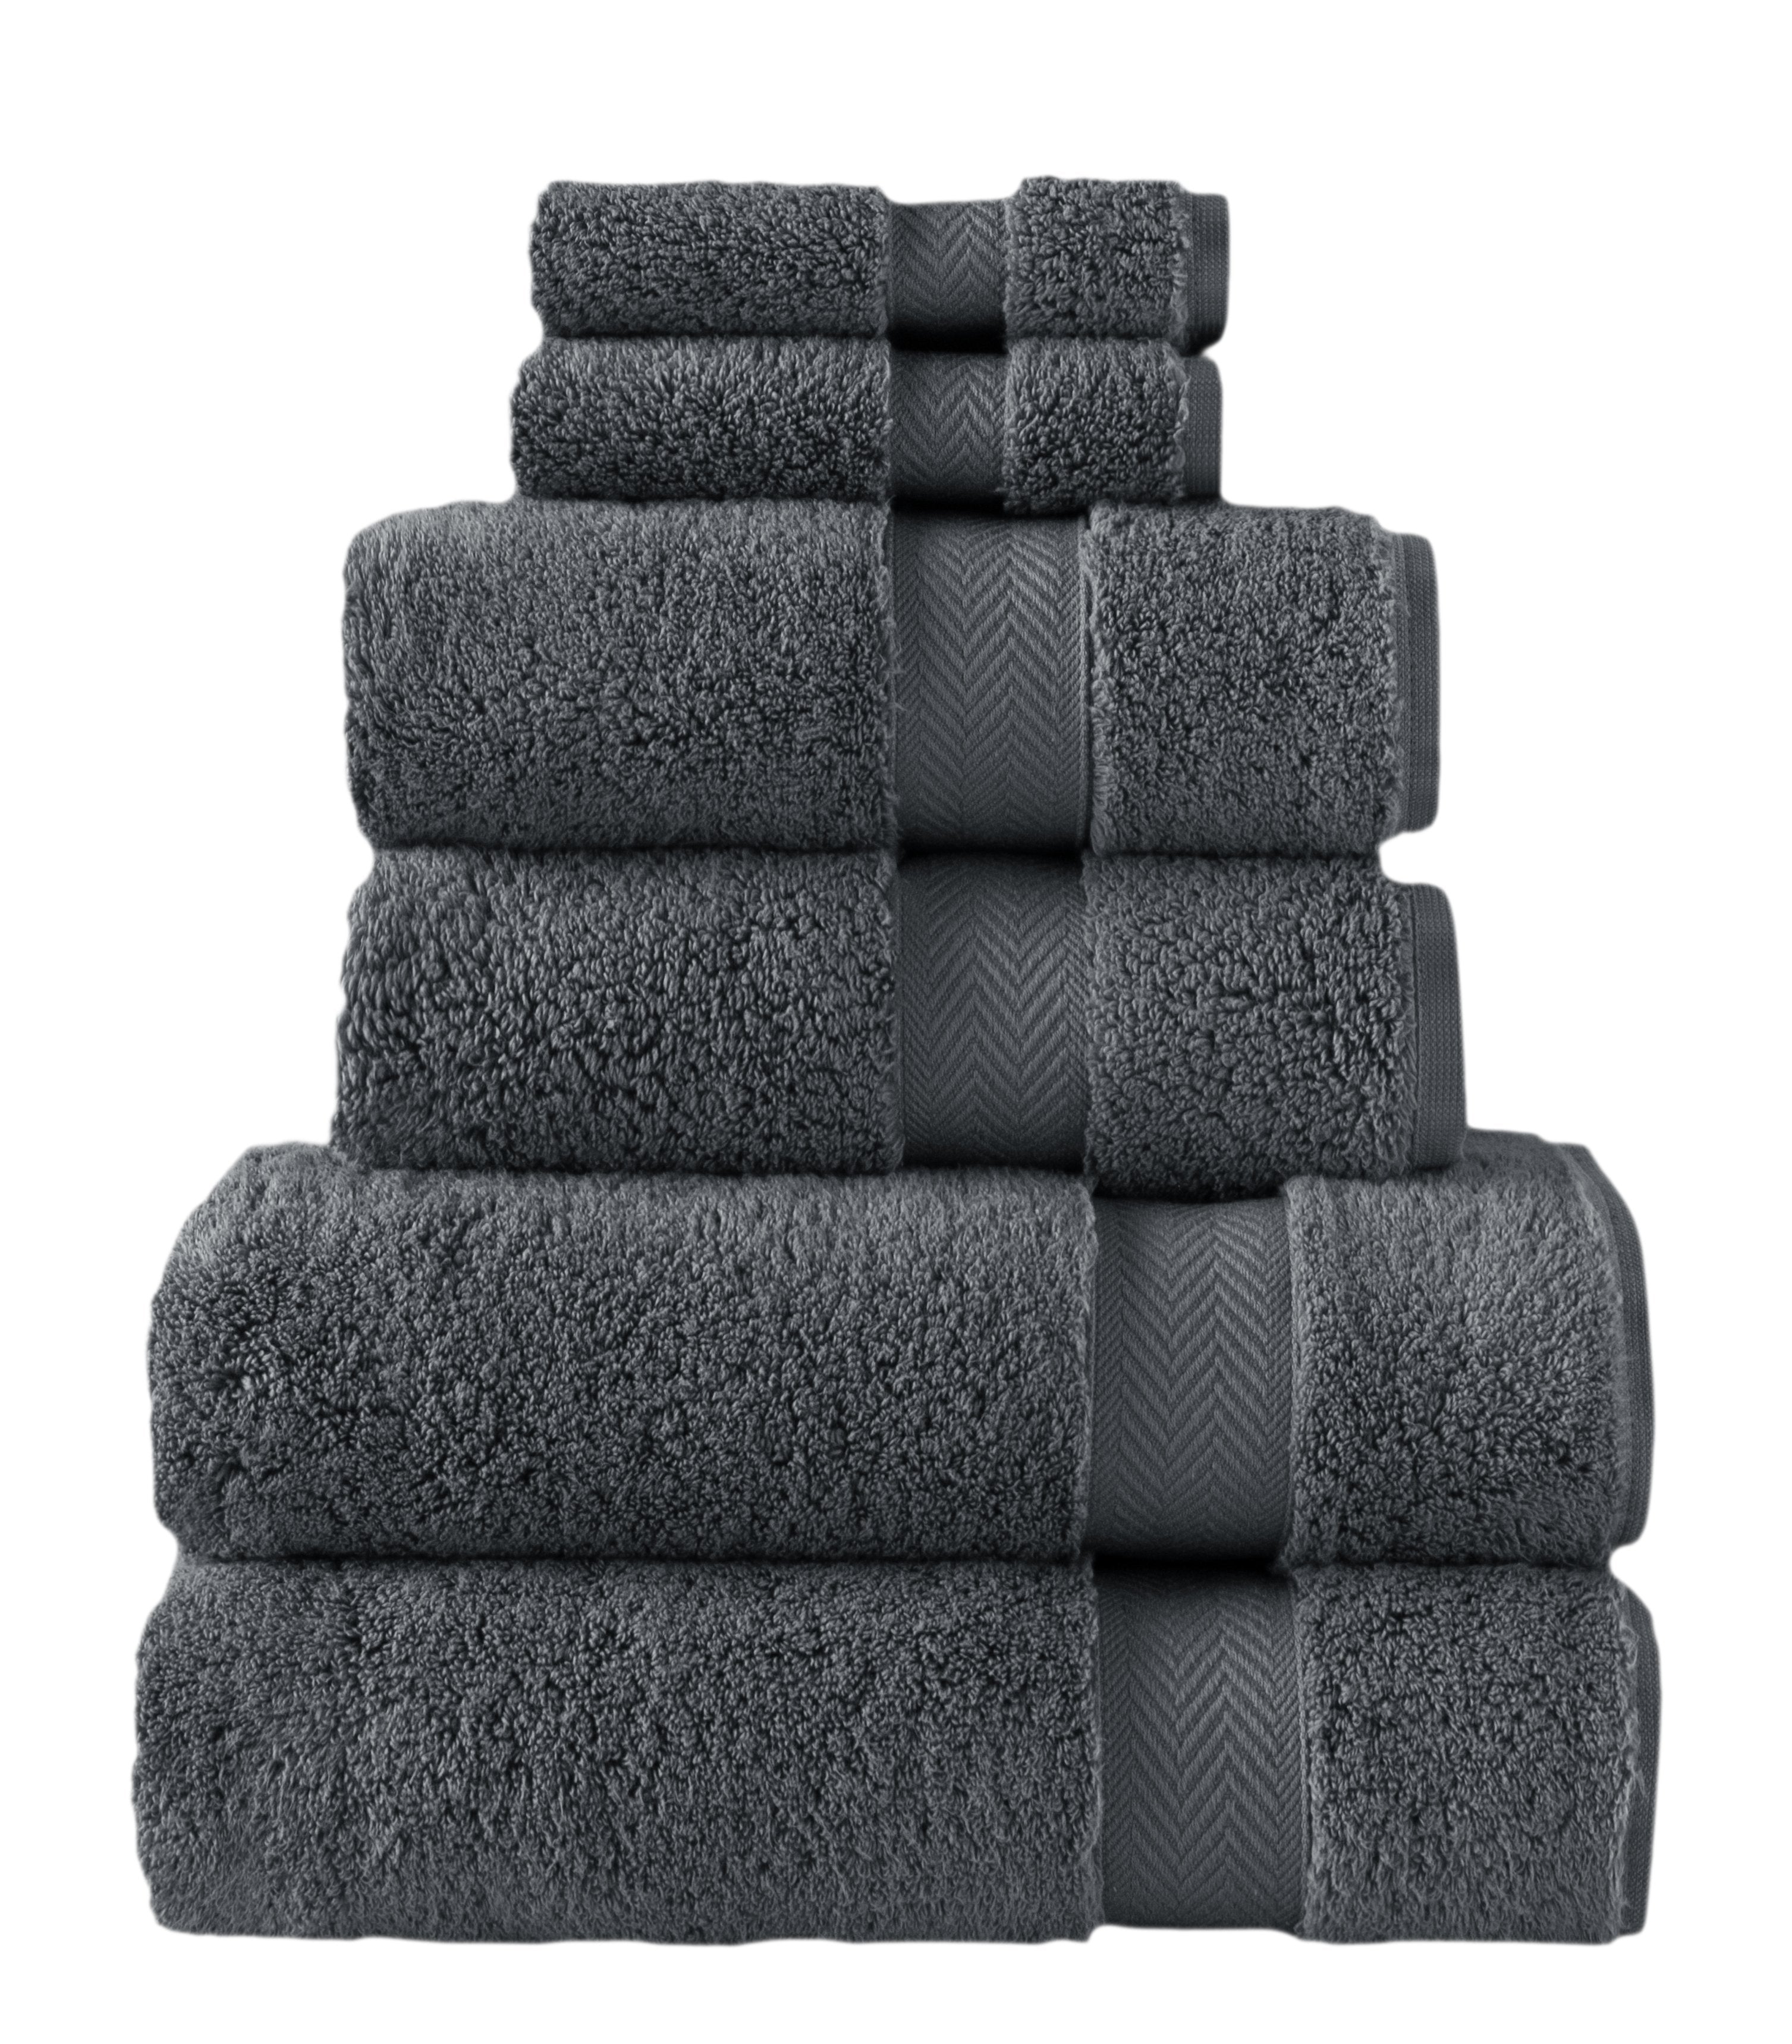 Klassic Collection 6 PK Towels Set - Dark Coal